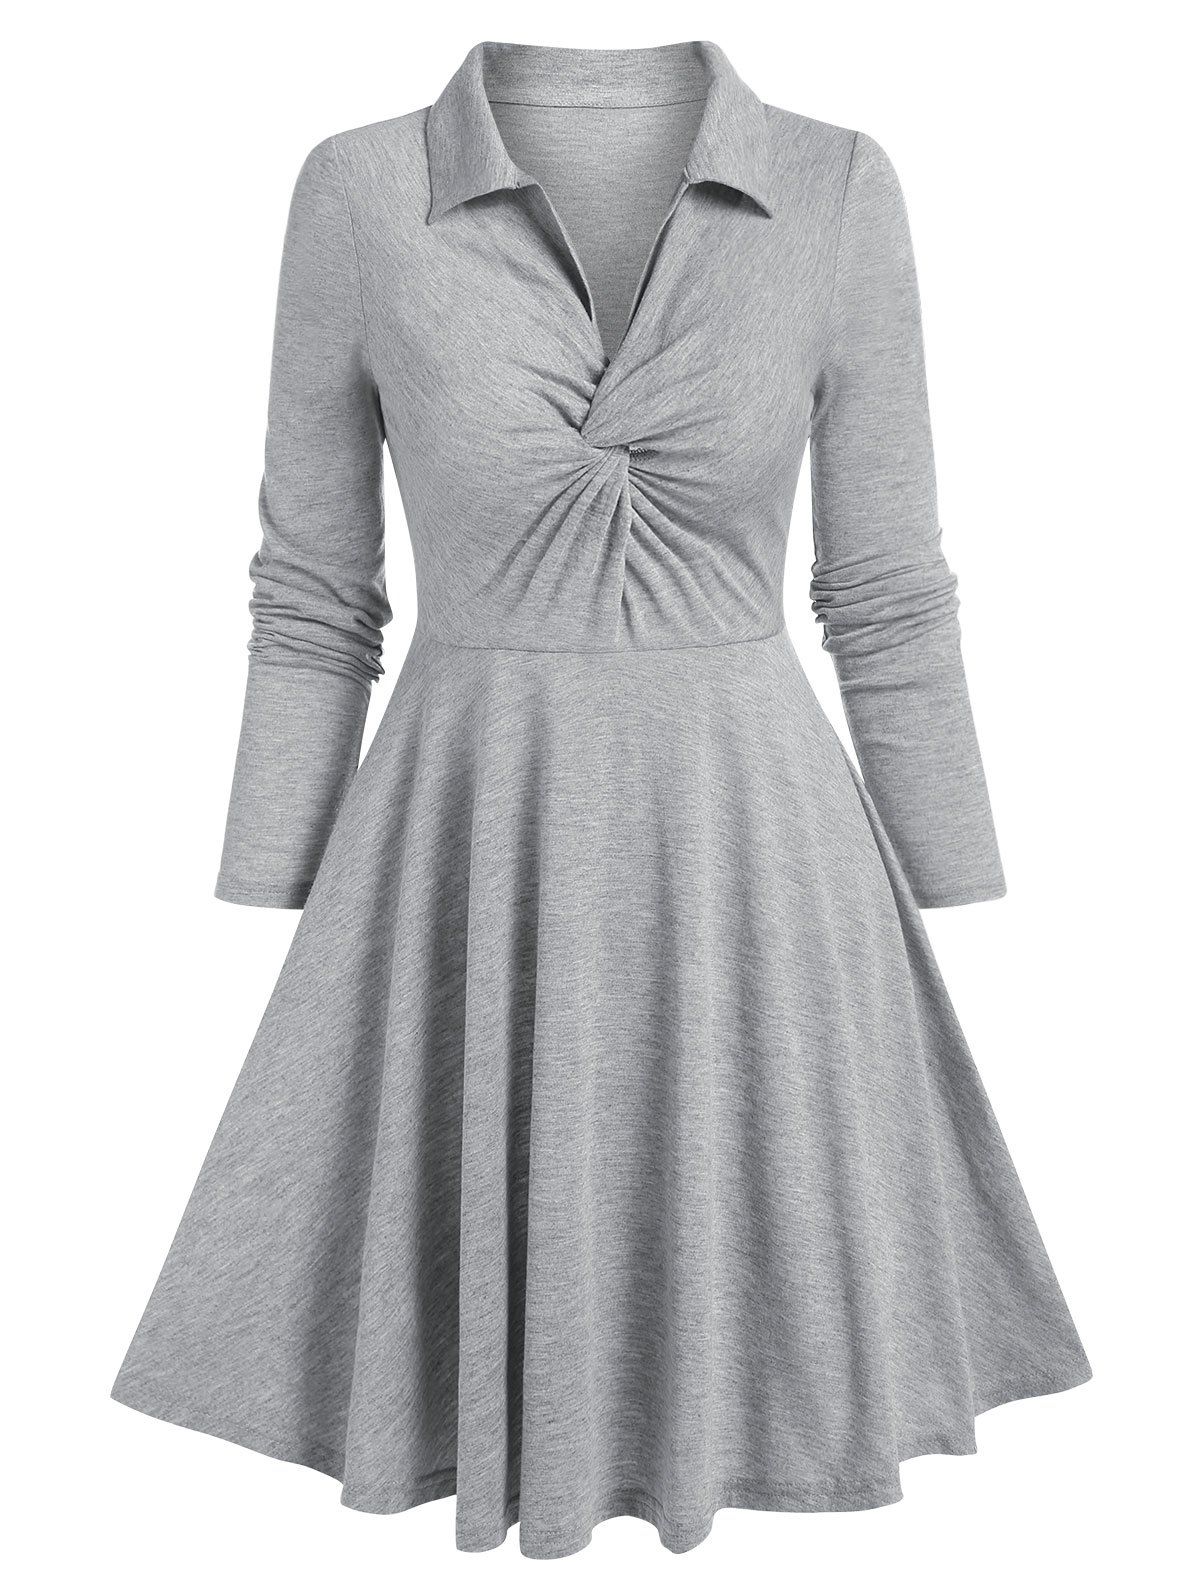 Twist Front Long Sleeve Heathered Dress - LIGHT GRAY M